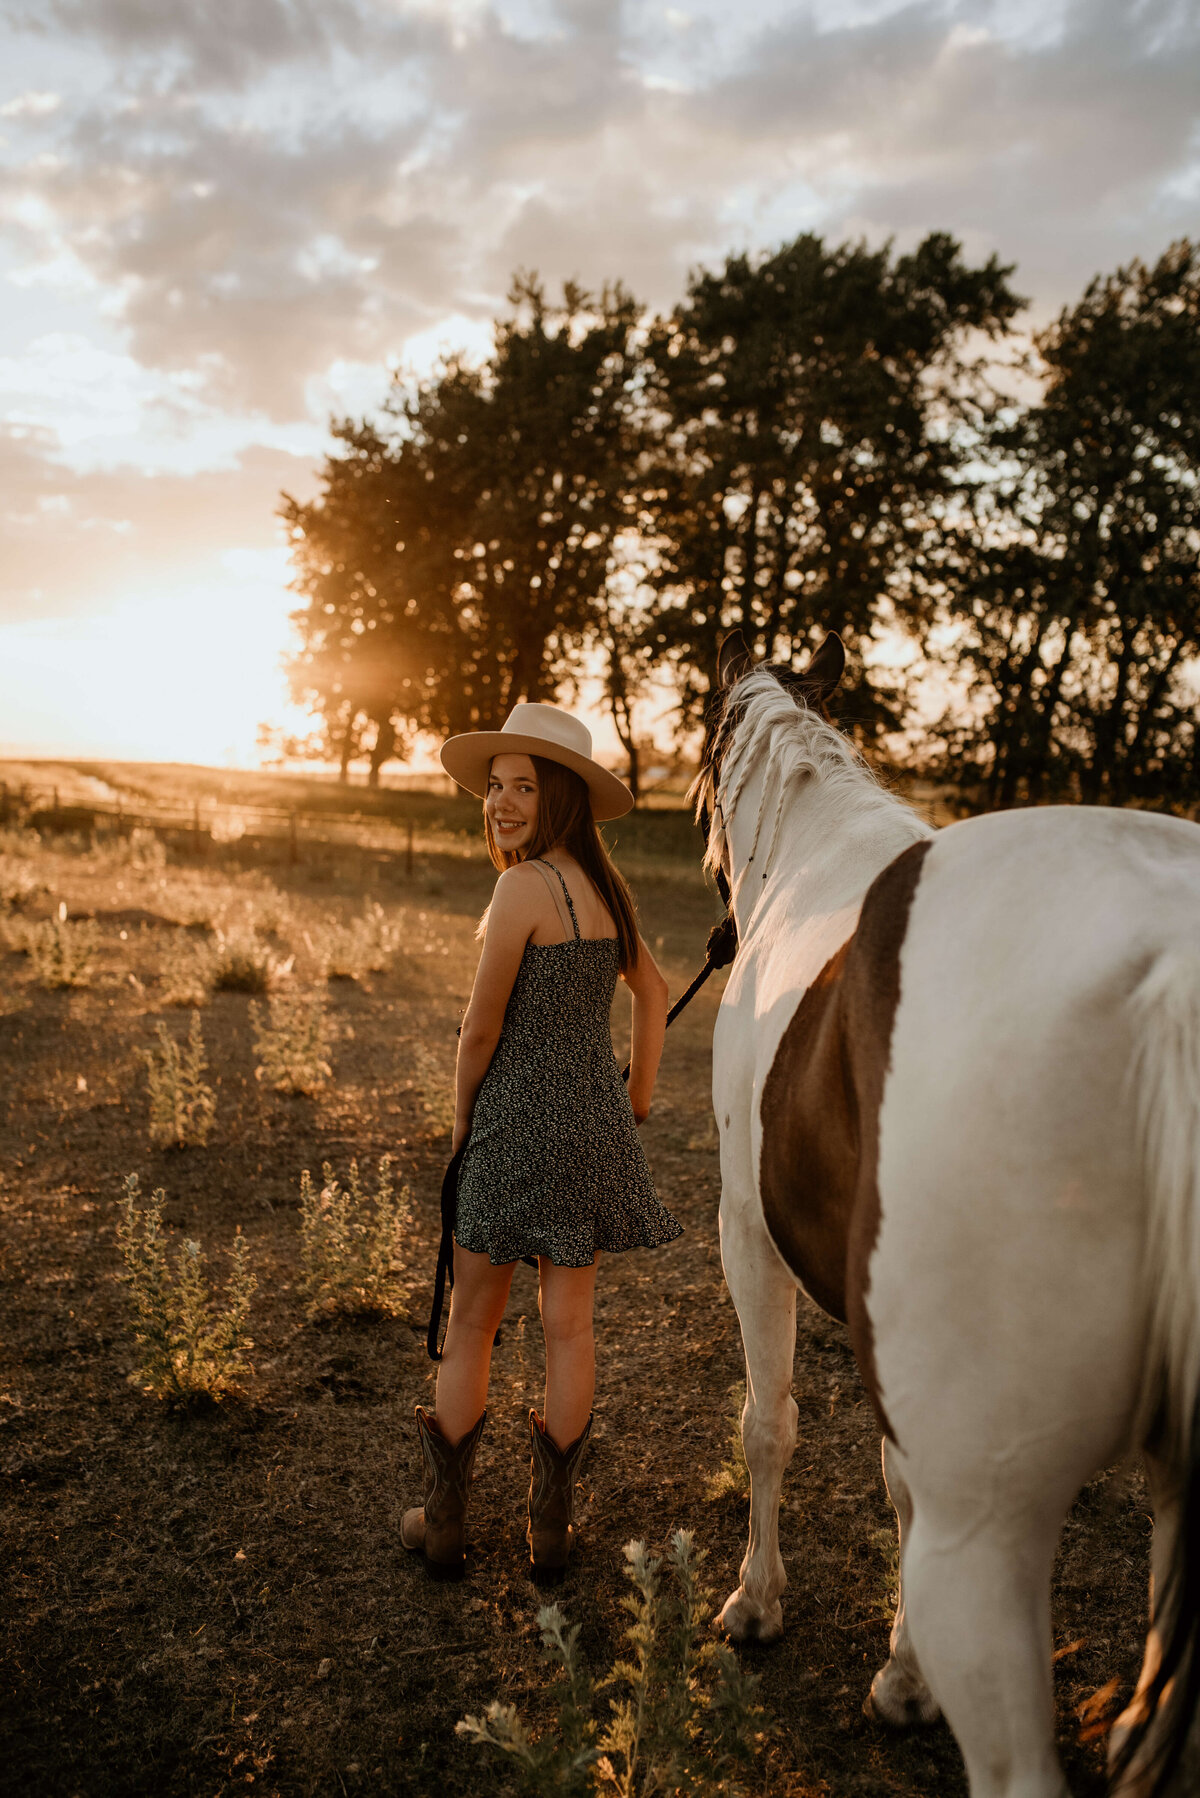 Lifestyle-photography-with-horses-Alberta-Calgary-Canada